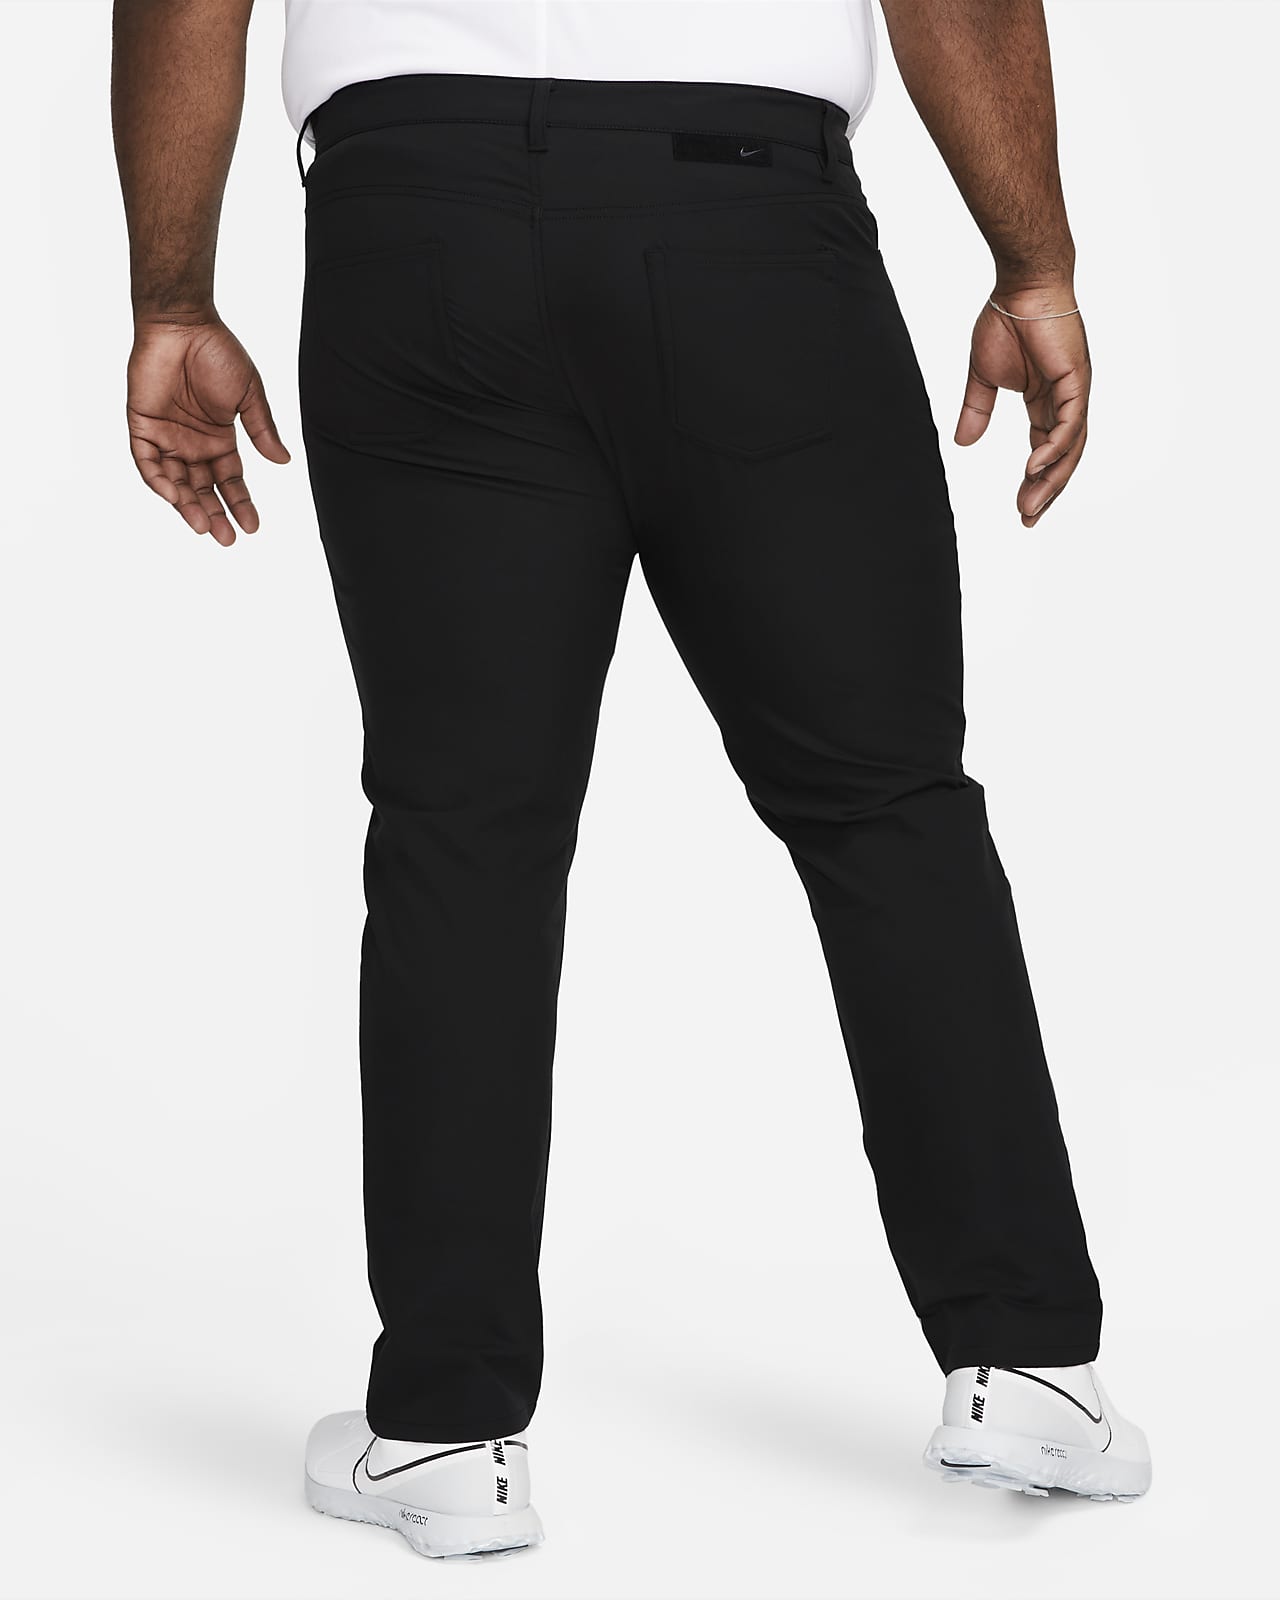 Dri-FIT Repel golfbukse med fem lommer smal passform til herre. Nike NO